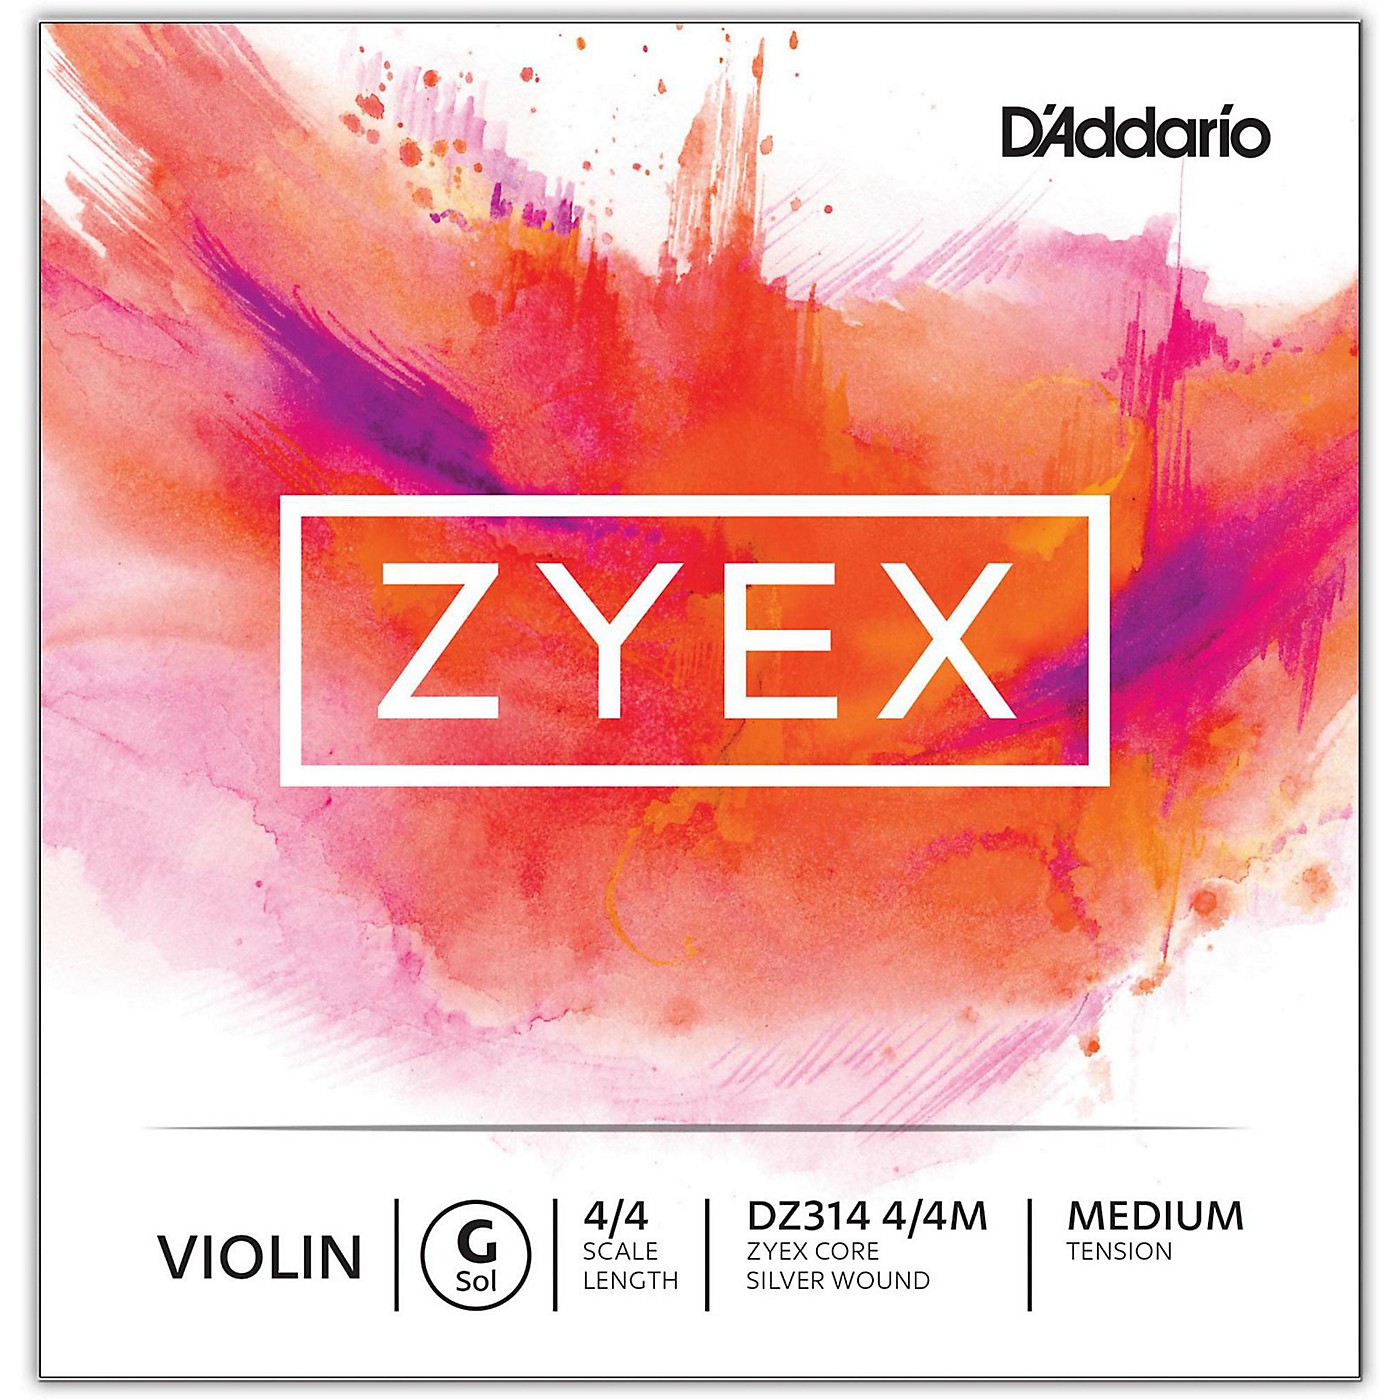 D'Addario Zyex Series Violin G String thumbnail